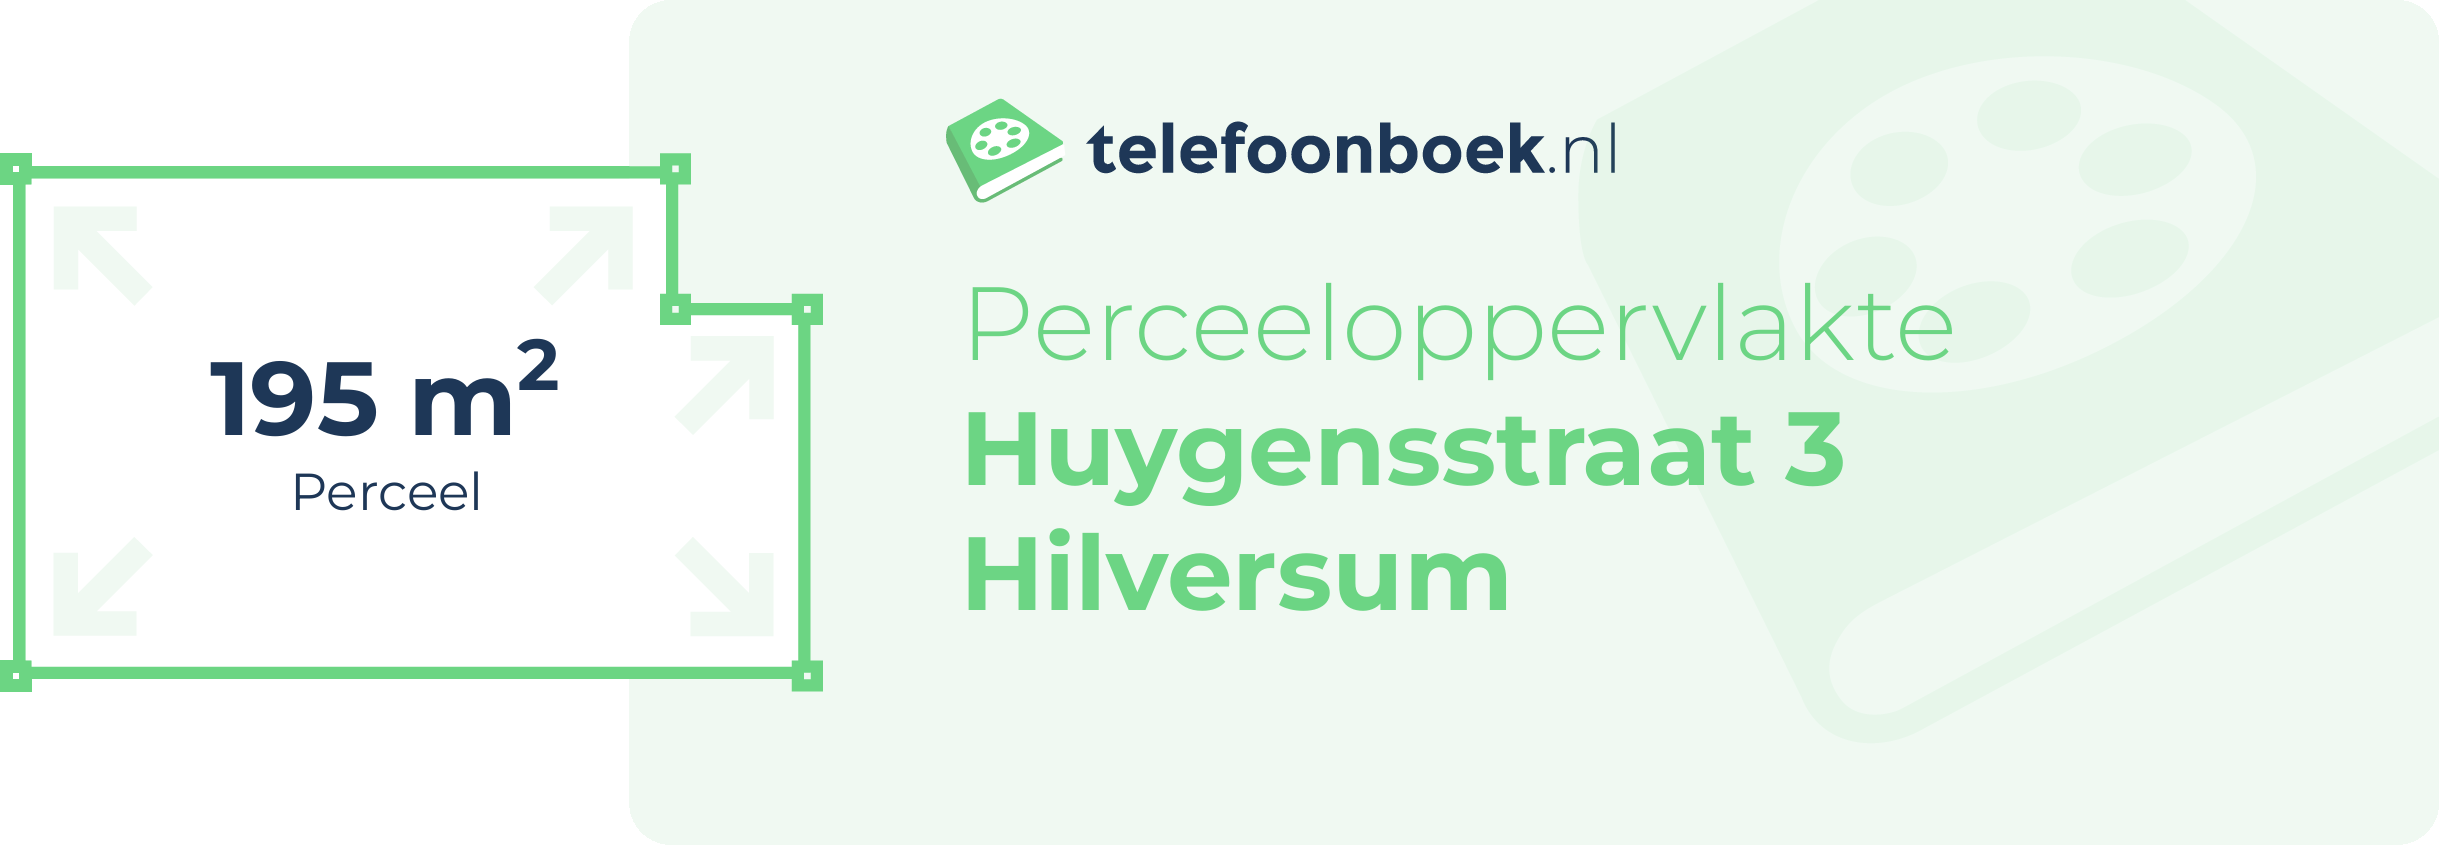 Perceeloppervlakte Huygensstraat 3 Hilversum